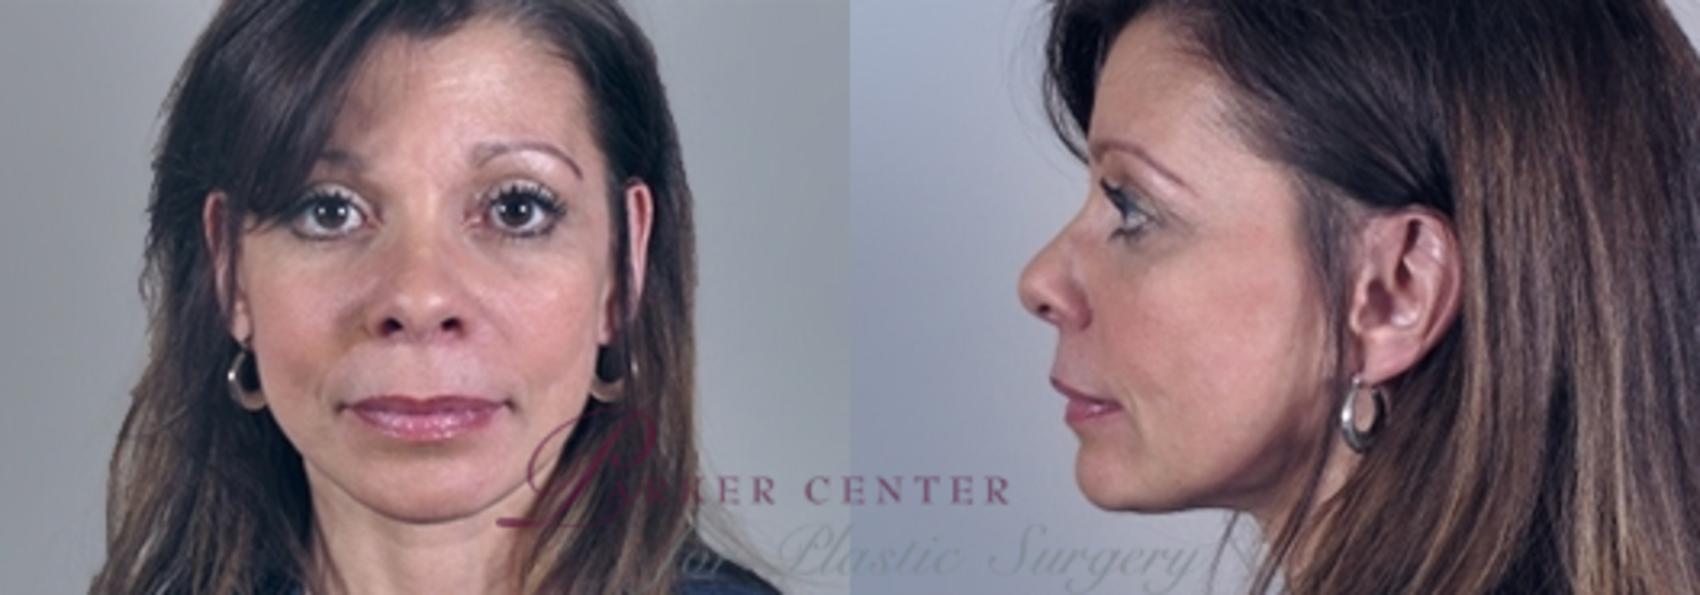 Eyelid Lift Case 848 Before & After View #1 | Paramus, NJ | Parker Center for Plastic Surgery